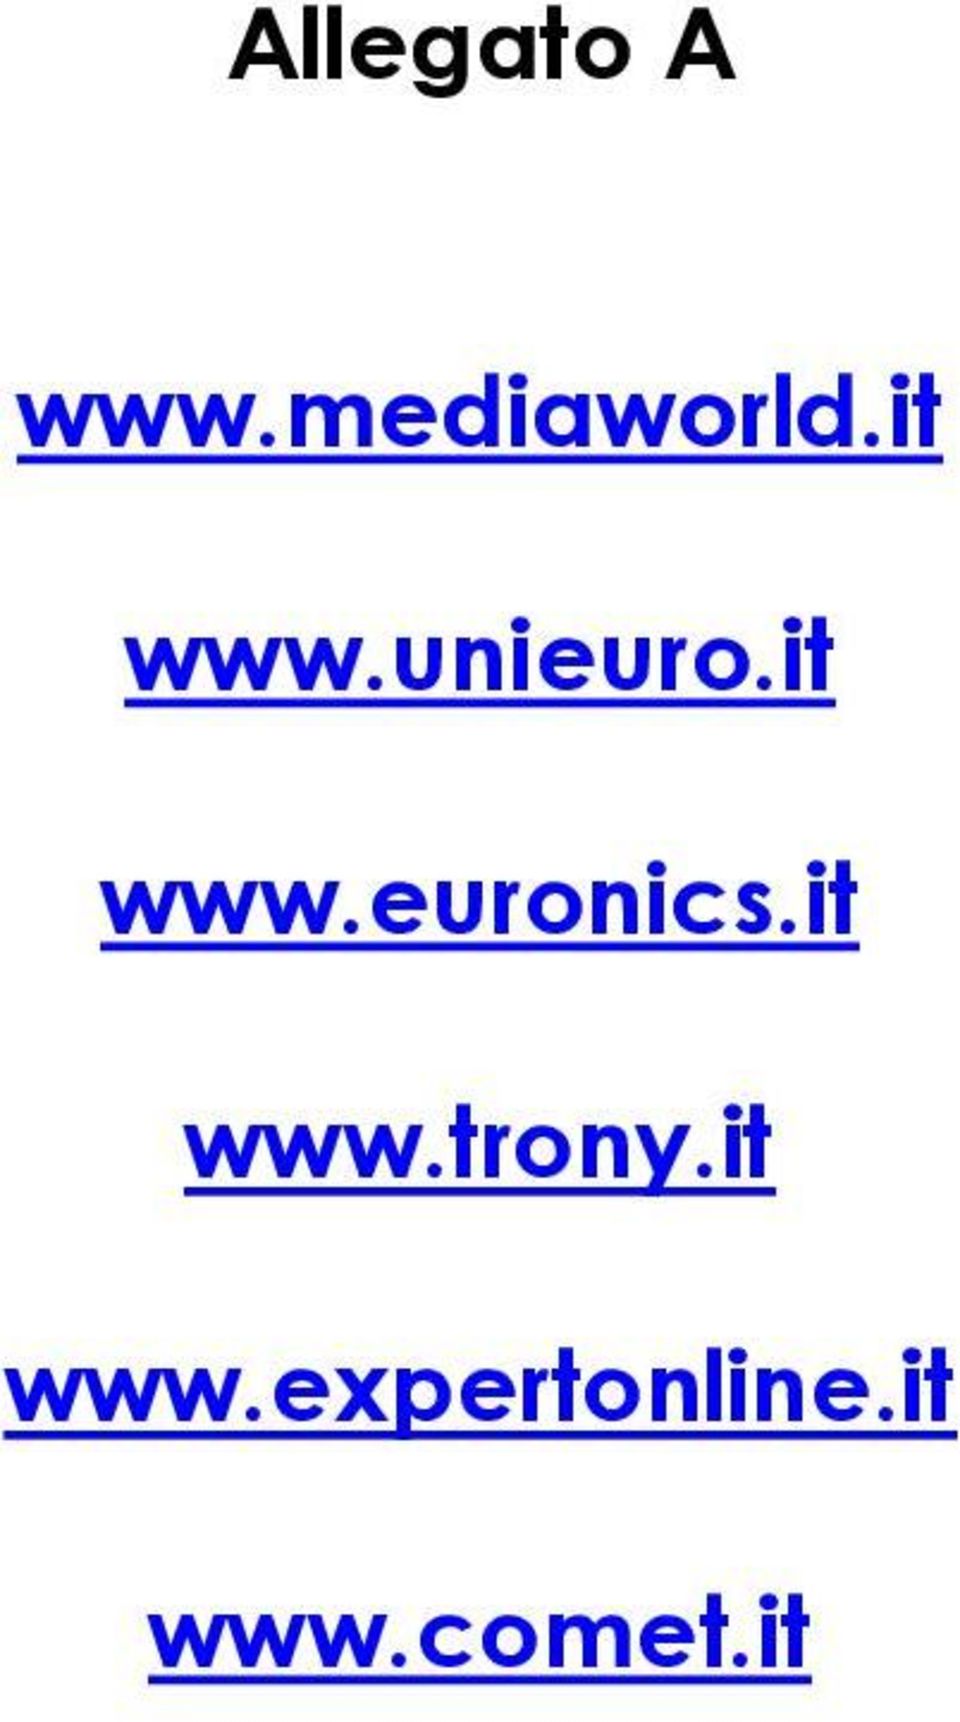 it www.trony.it www.expertonline.